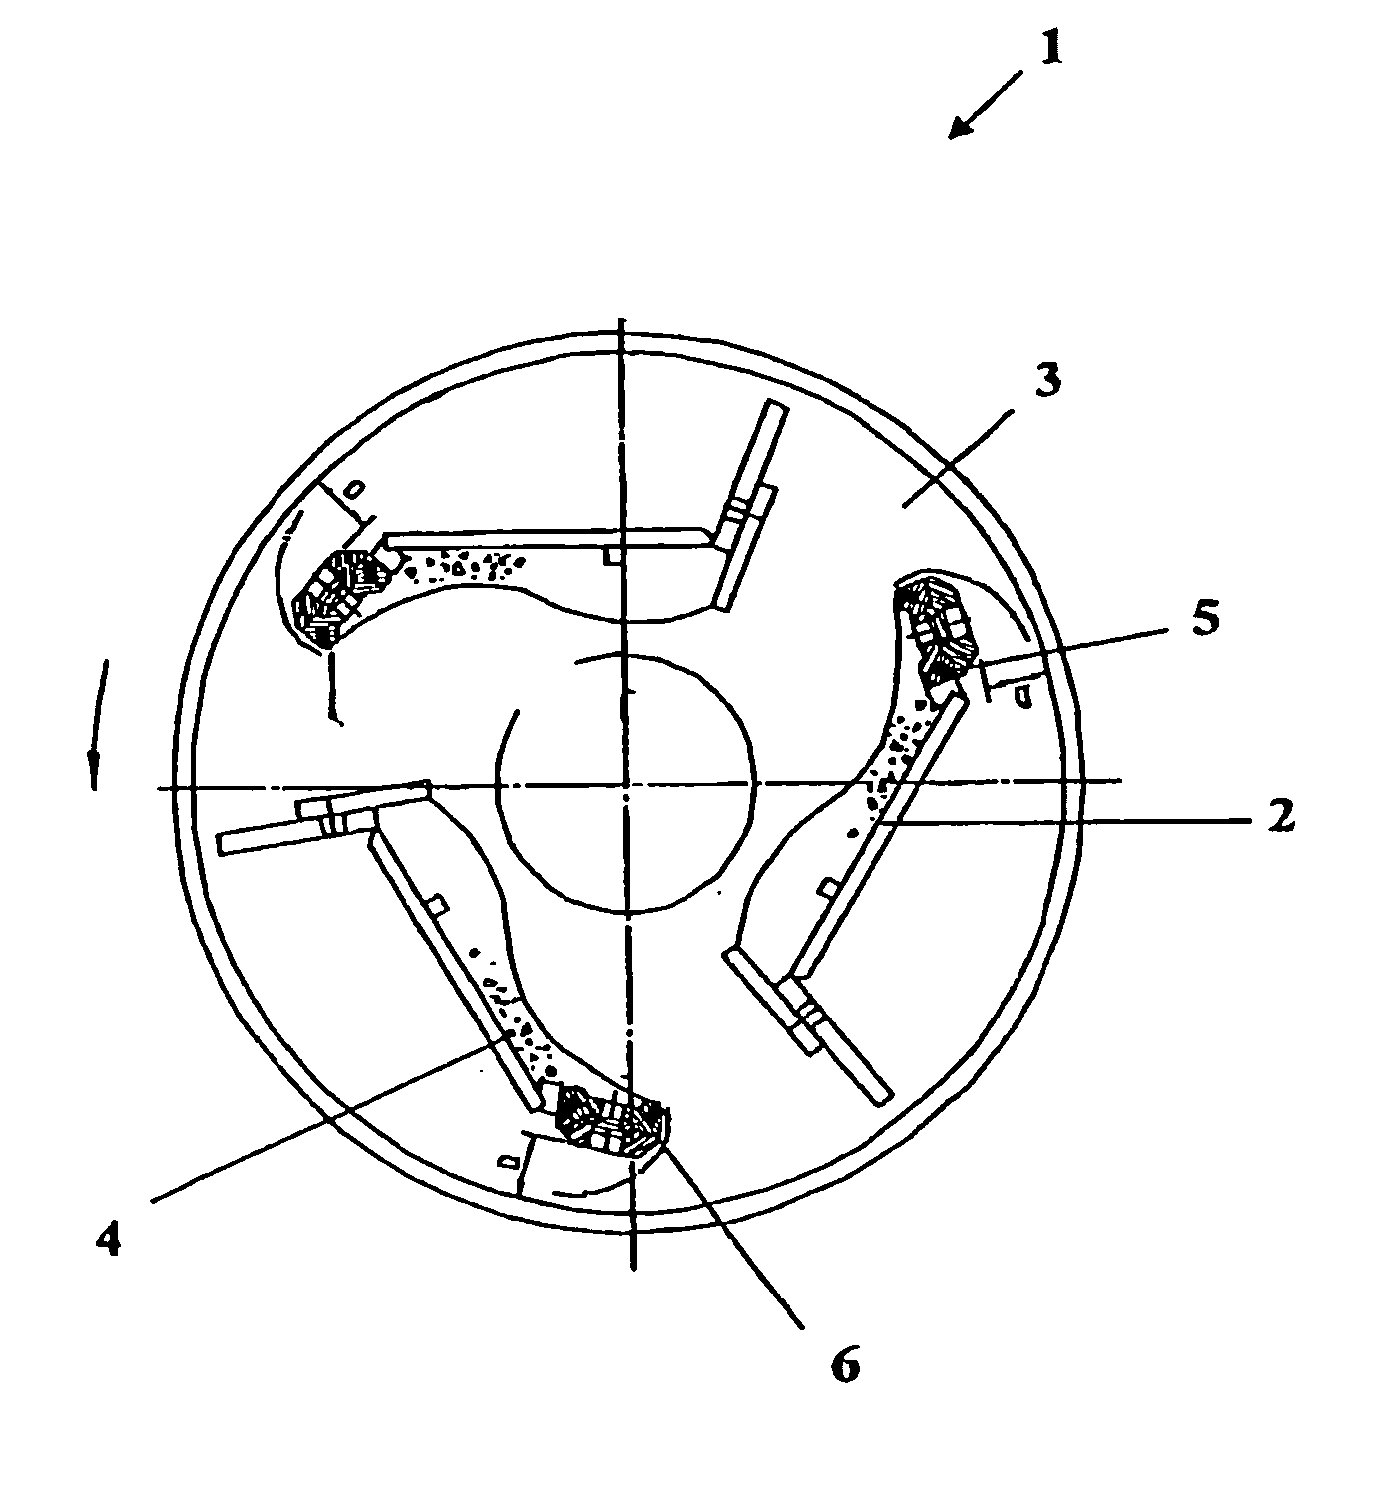 Rotor tip